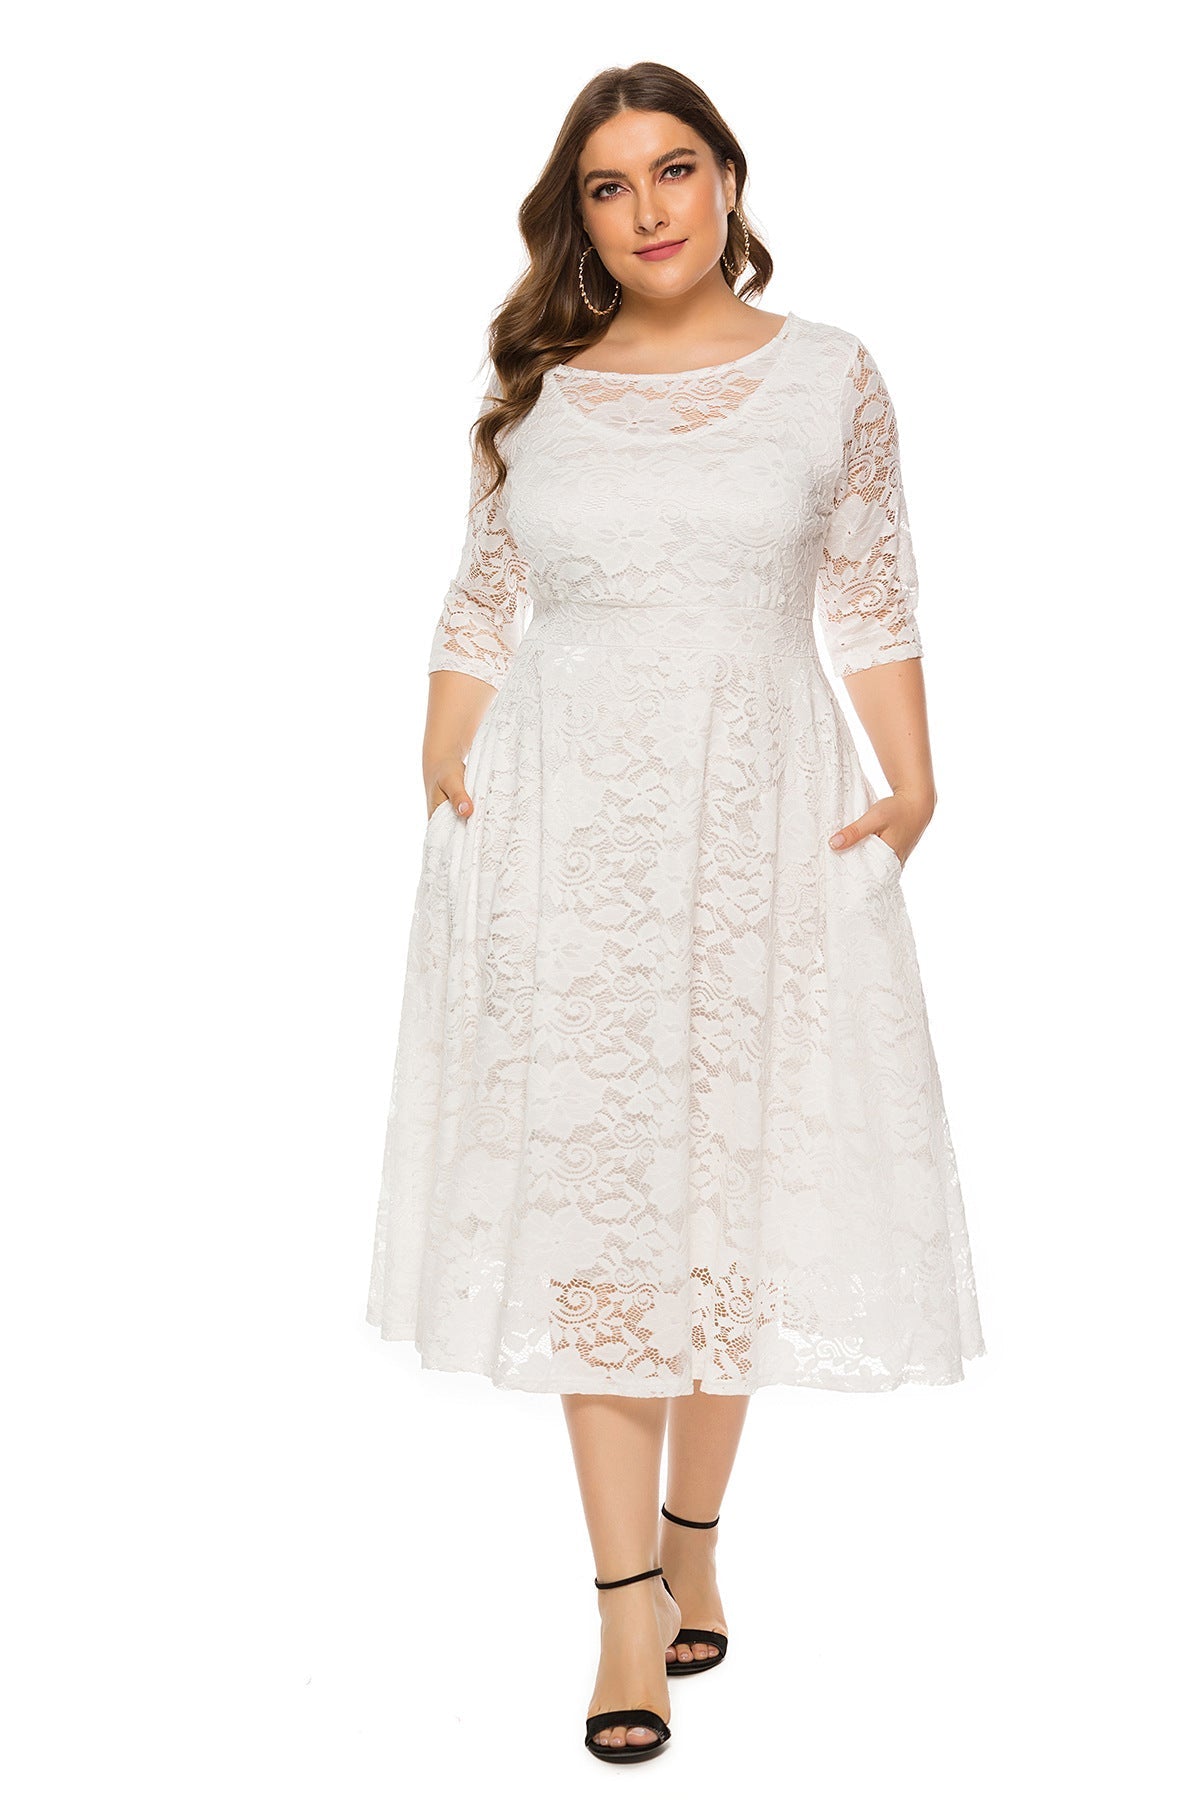 Plus Size Dresses For Women Lace Hollow Pocket Midi Prom Dresses